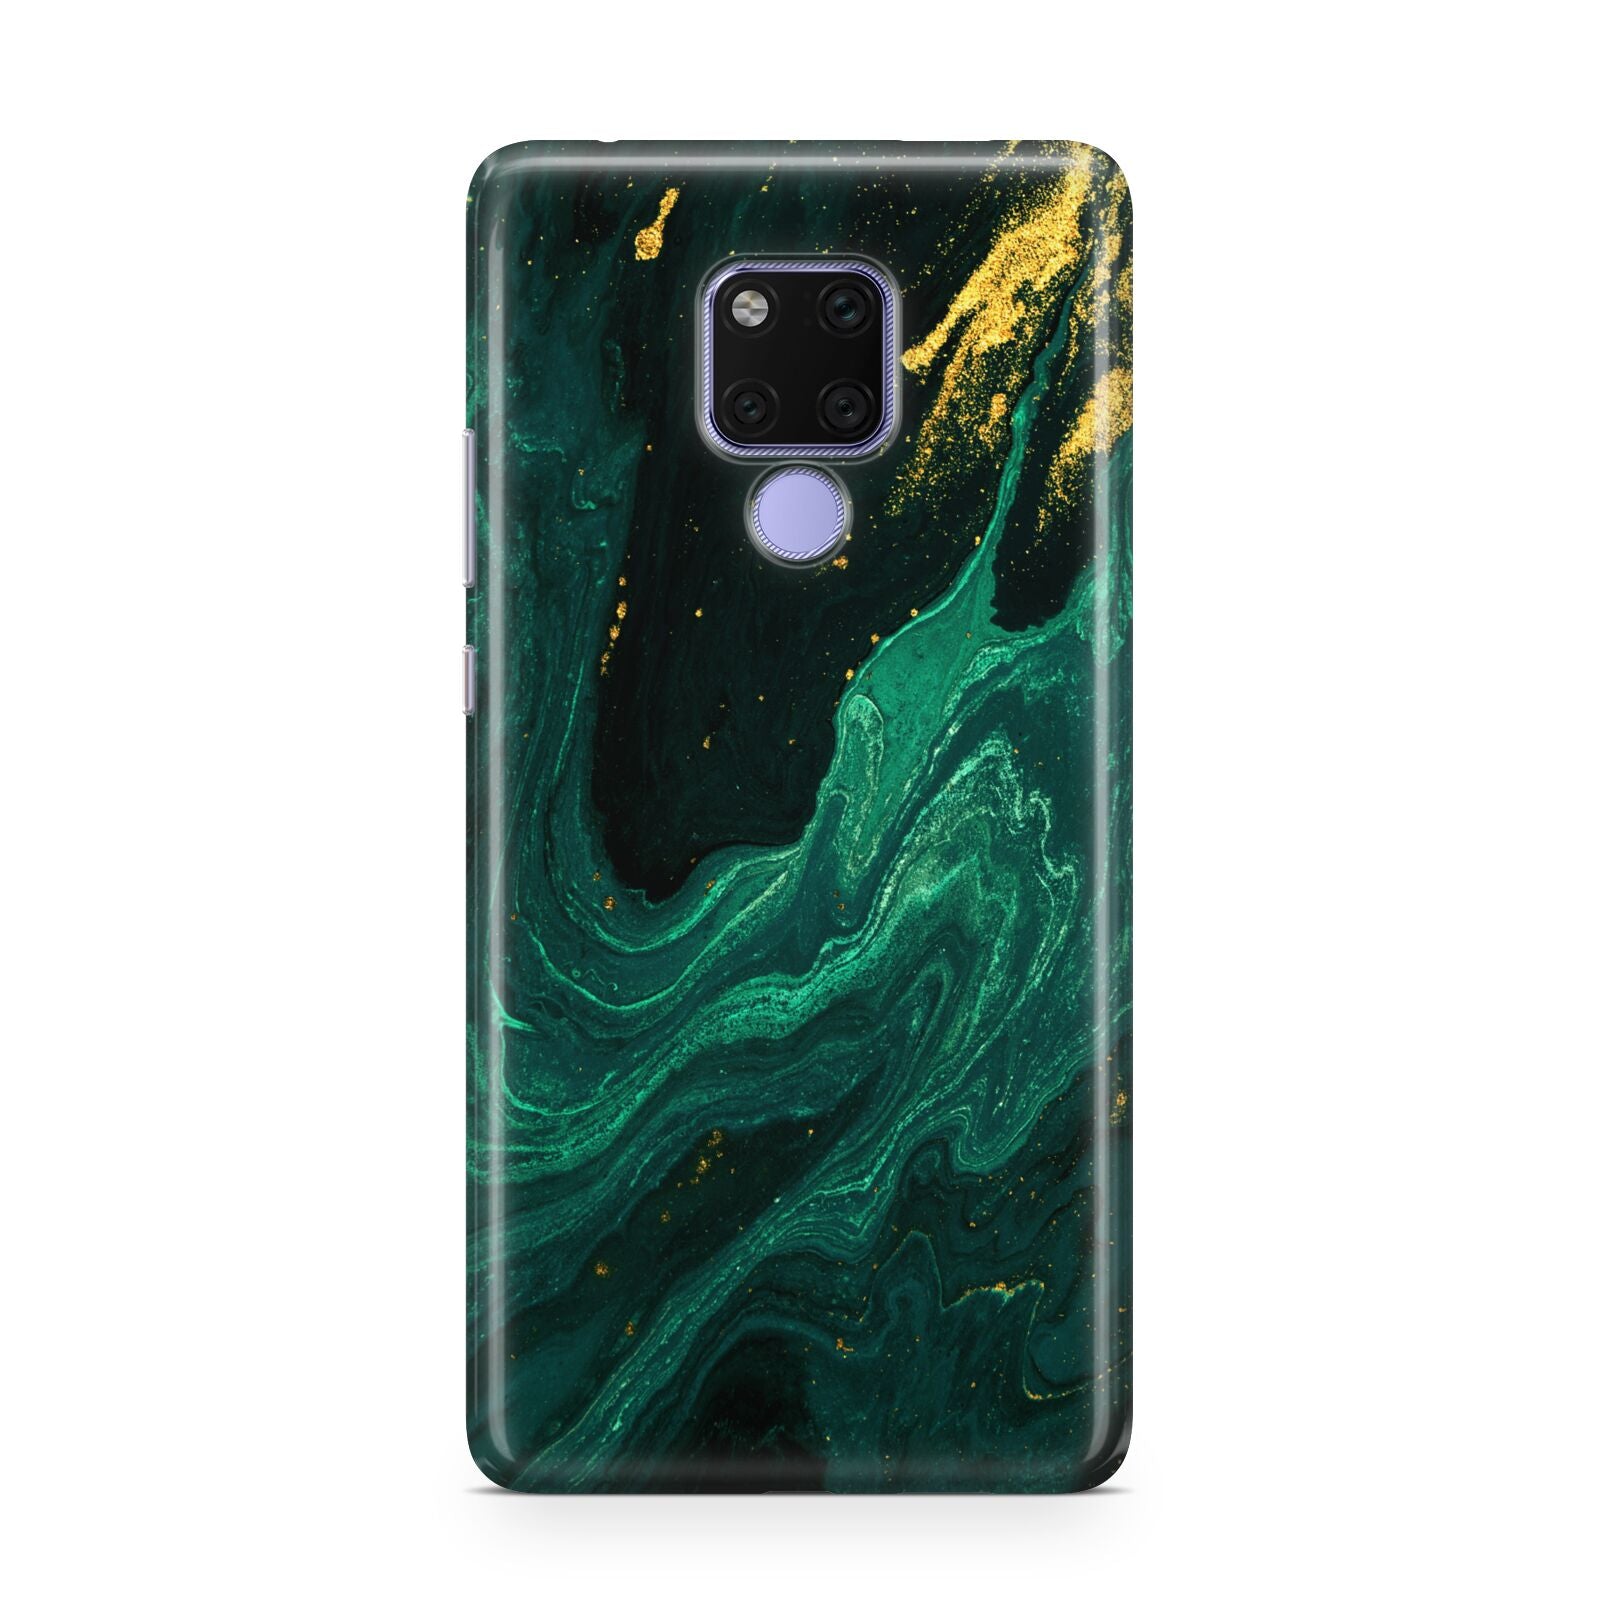 Emerald Green Huawei Mate 20X Phone Case